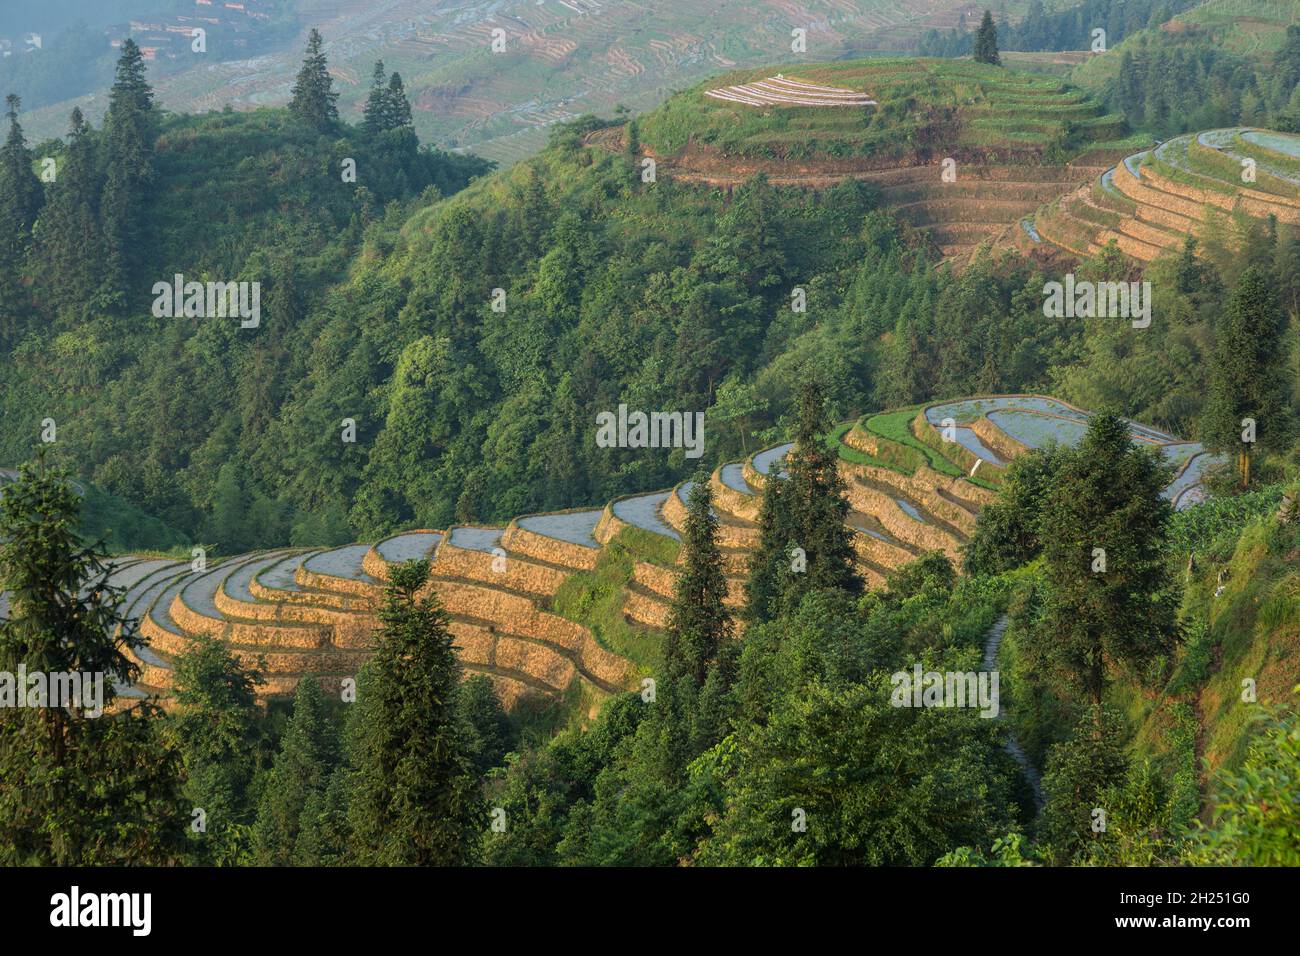 The Ping'an terraces of the Longi rice terraces in Longshen, Guanxi, China. Stock Photo